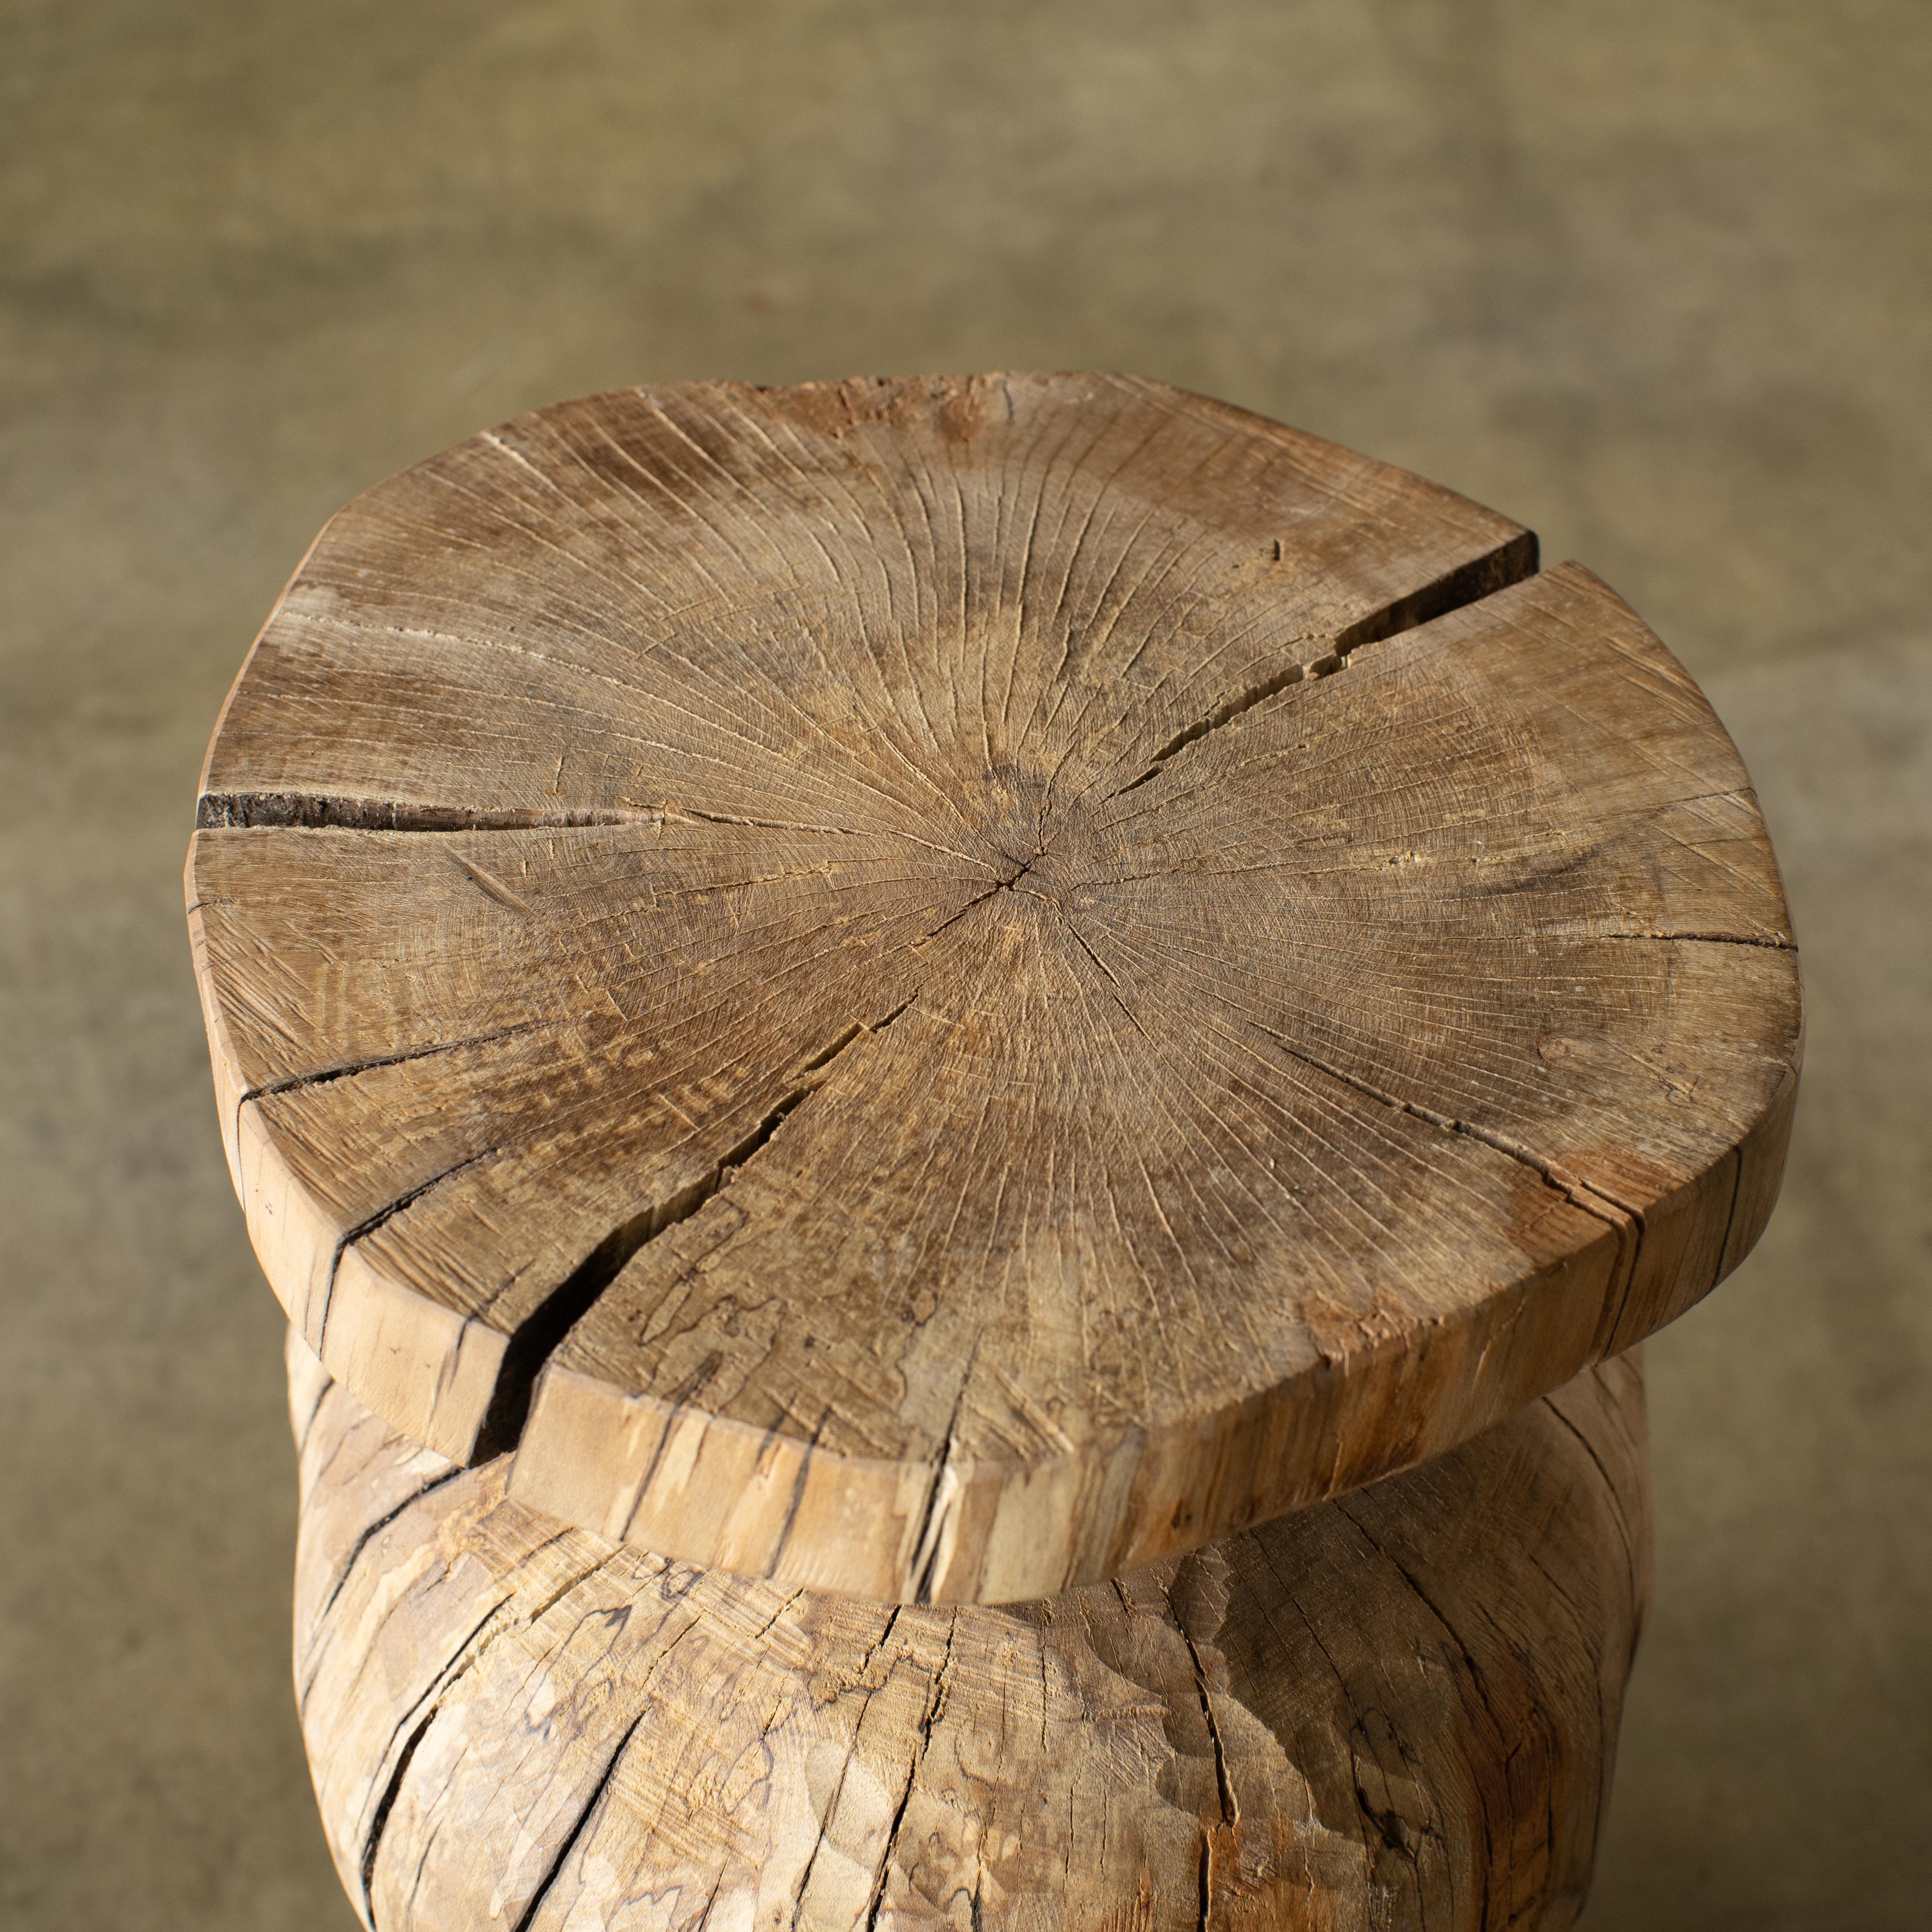 Contemporary Hiroyuki Nishimura Furniture Sculptural Wood Stool 10-12 Tribal Glamping